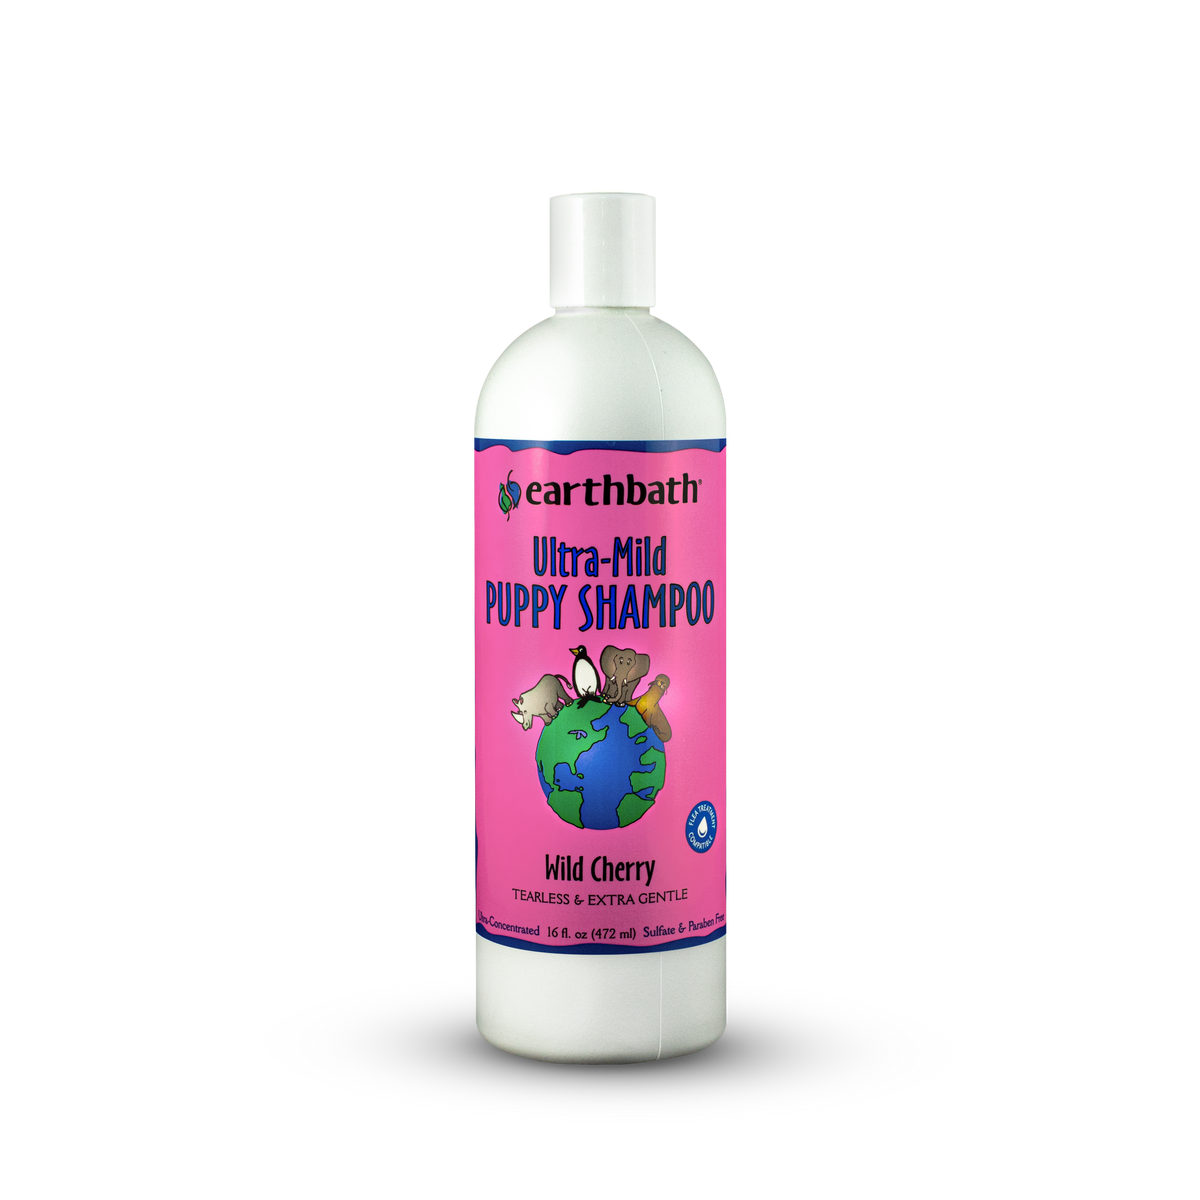 earthbath® Ultra-Mild Puppy Shampoo, Wild Cherry, Tearless & Extra Gentle, Made in USA, 16 oz